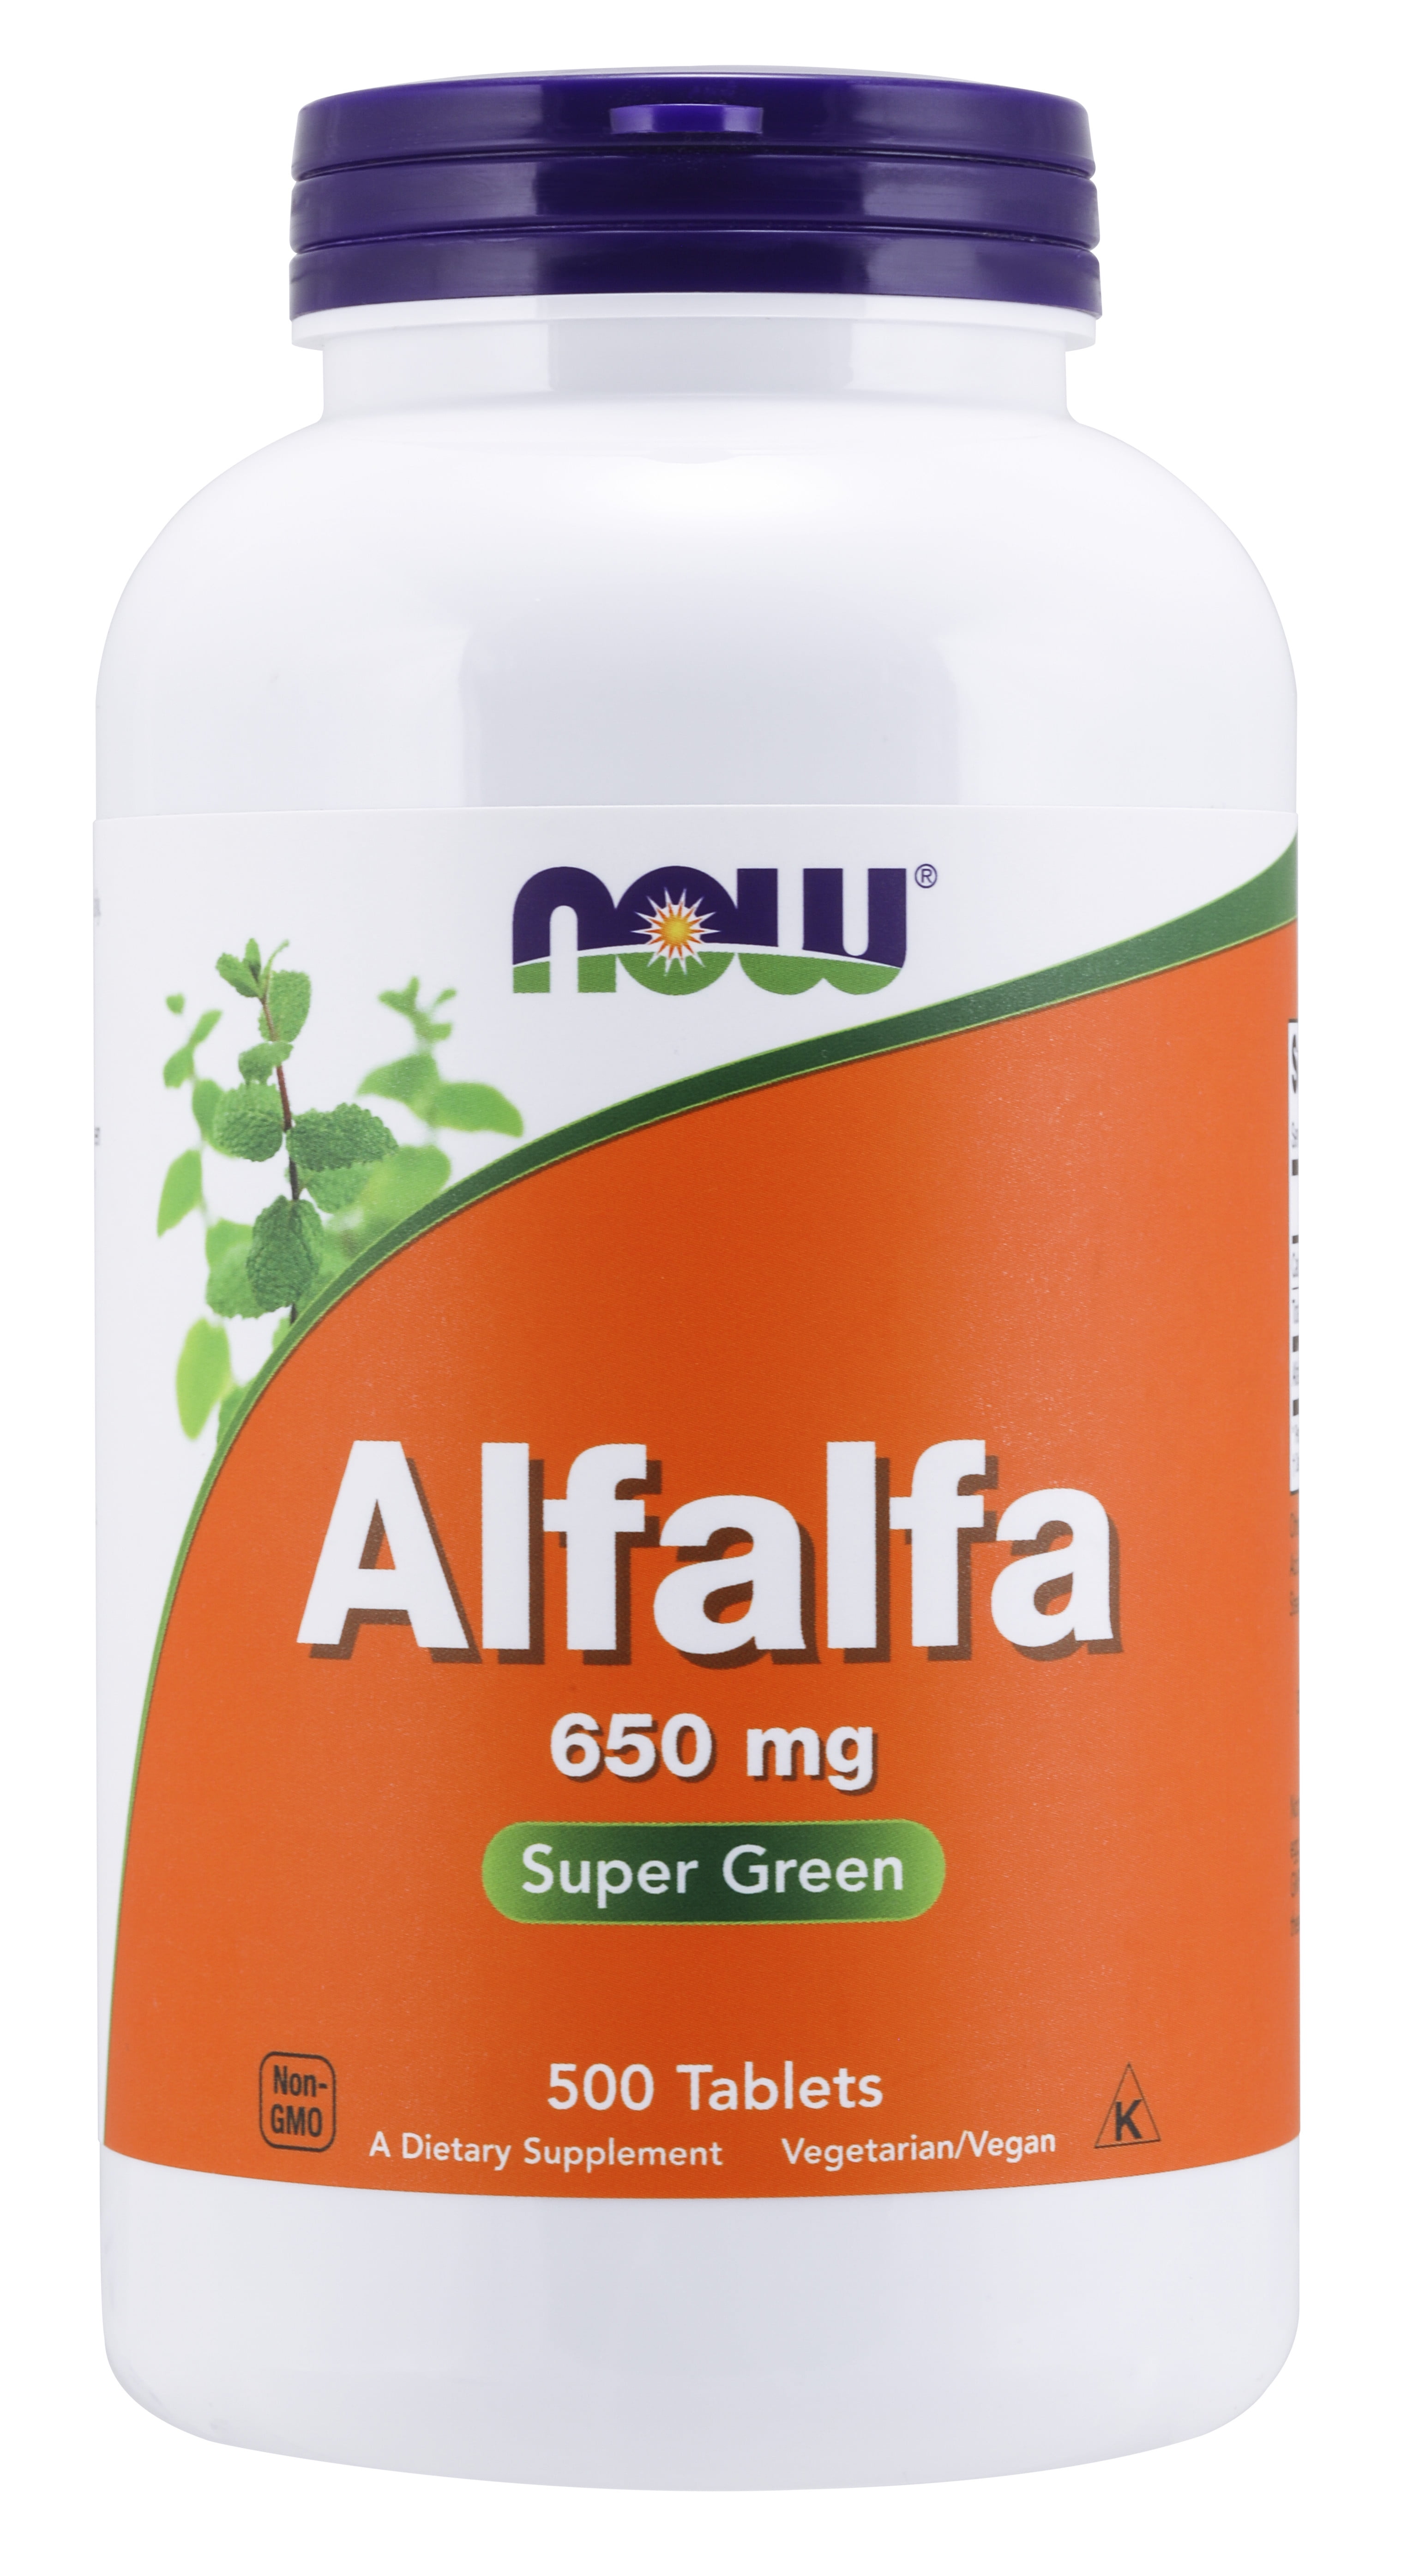 Alfalfa pills for breastfeeding